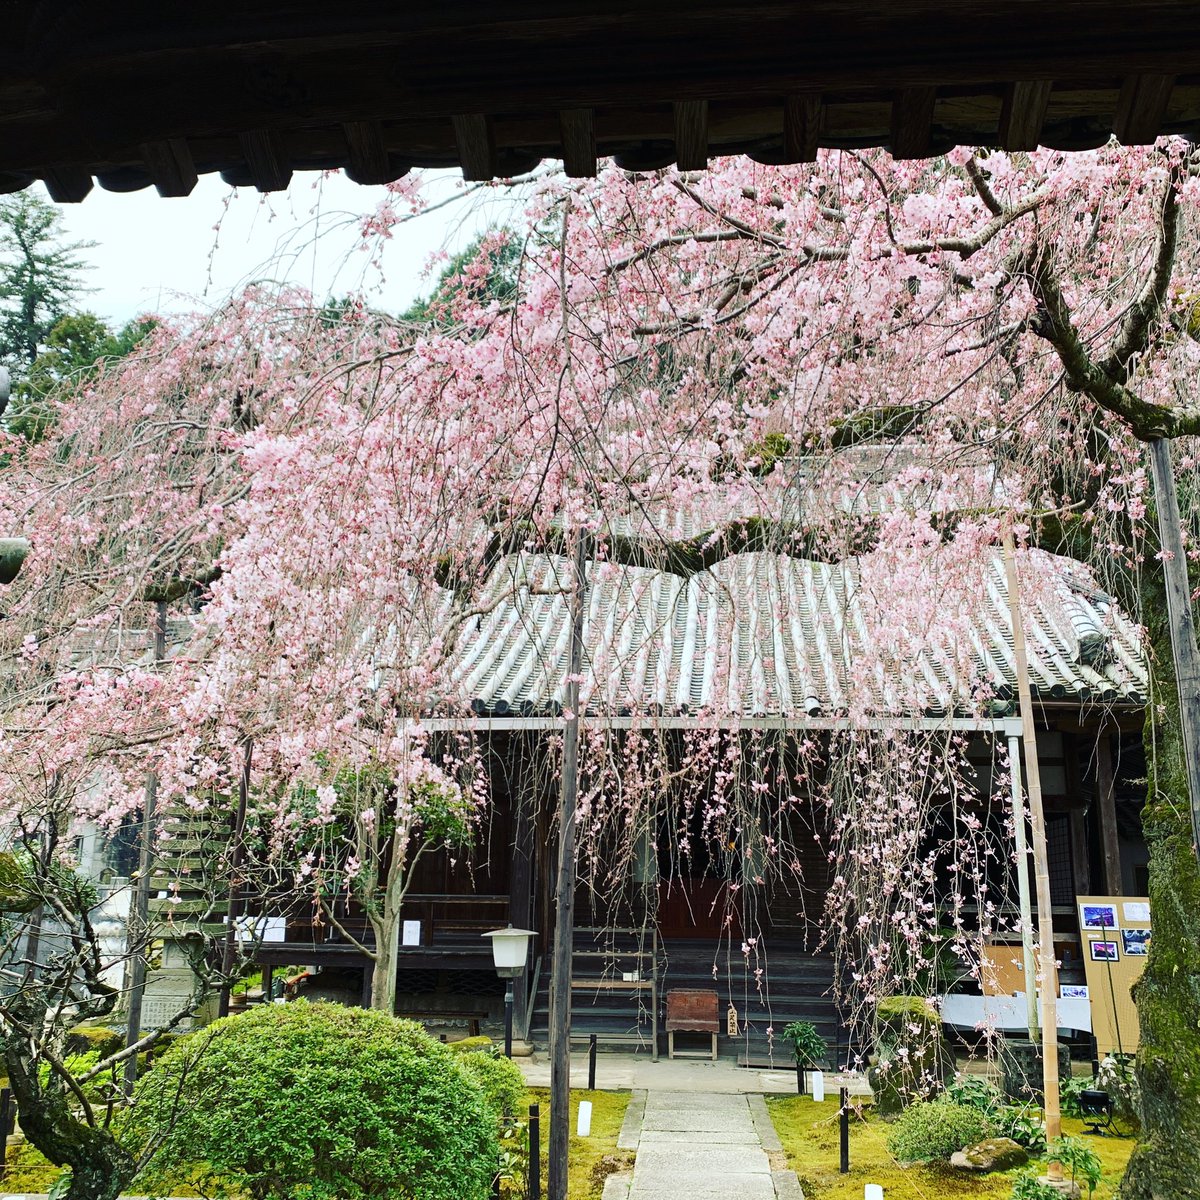 O Matsuno 二上山に登る前に専称寺の枝垂れ桜 尋源桜 を観に行きました まだ３分咲くらいで もう少しで満開です 枝垂れ桜 二上山 専称寺 Wheepingcherry 奈良 尋源桜 Nara